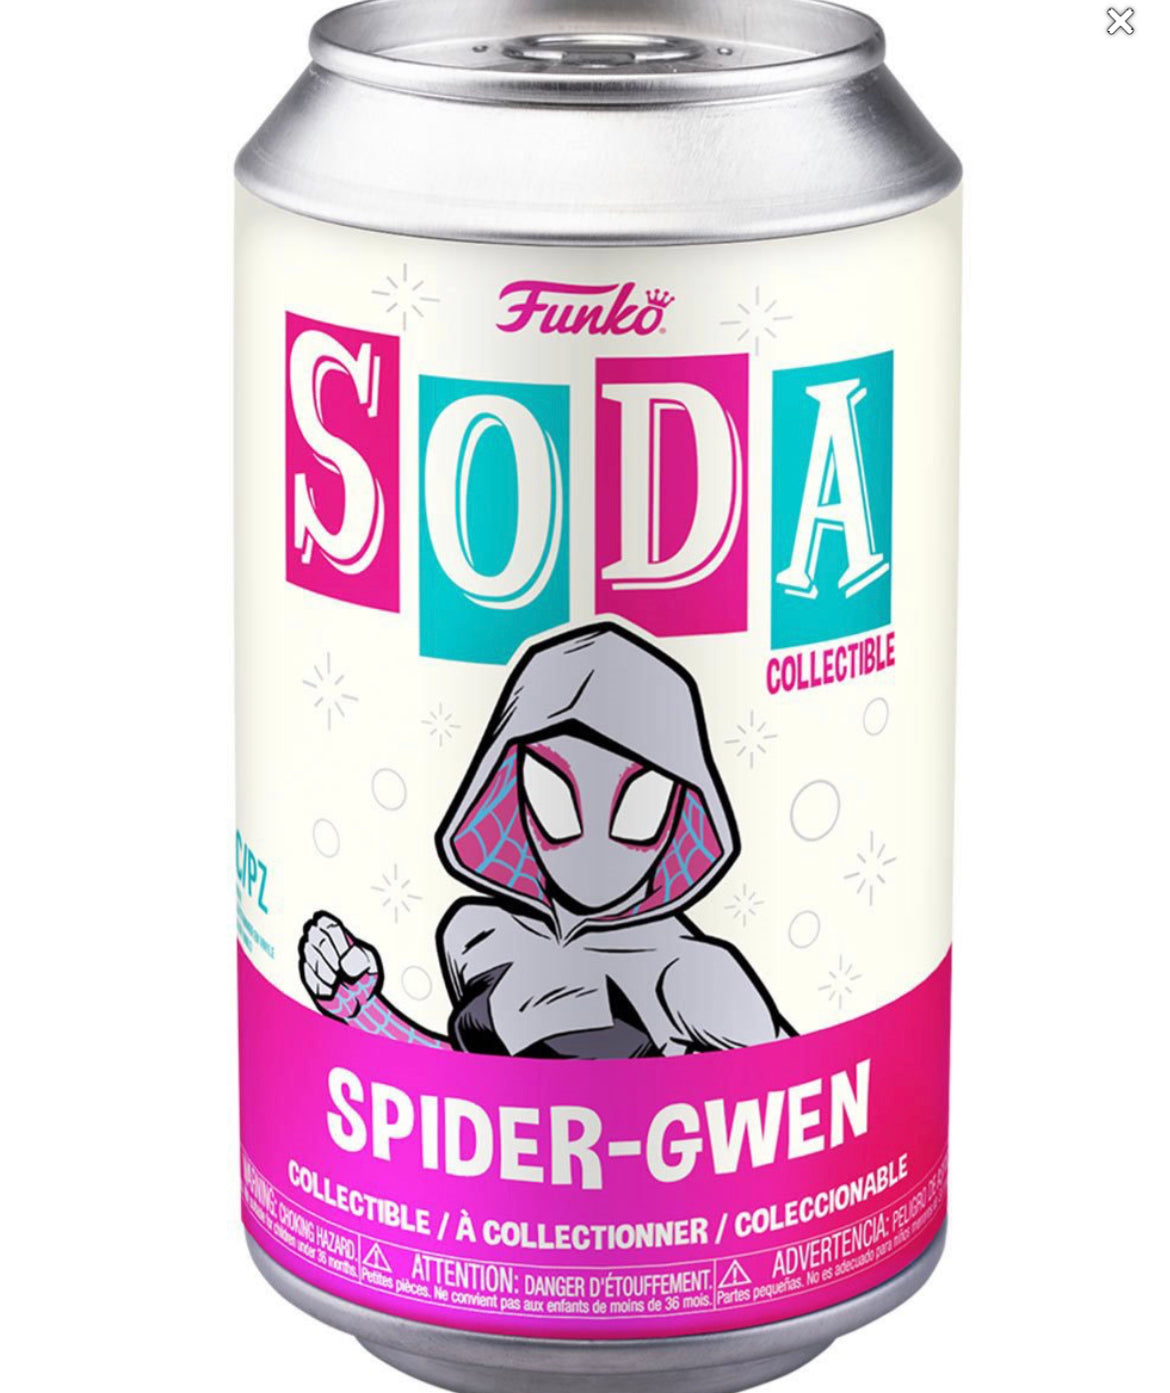 Marvel spiderverse Spider-Gwen Vinyl Soda sealed Mystery Funko figure limit 6